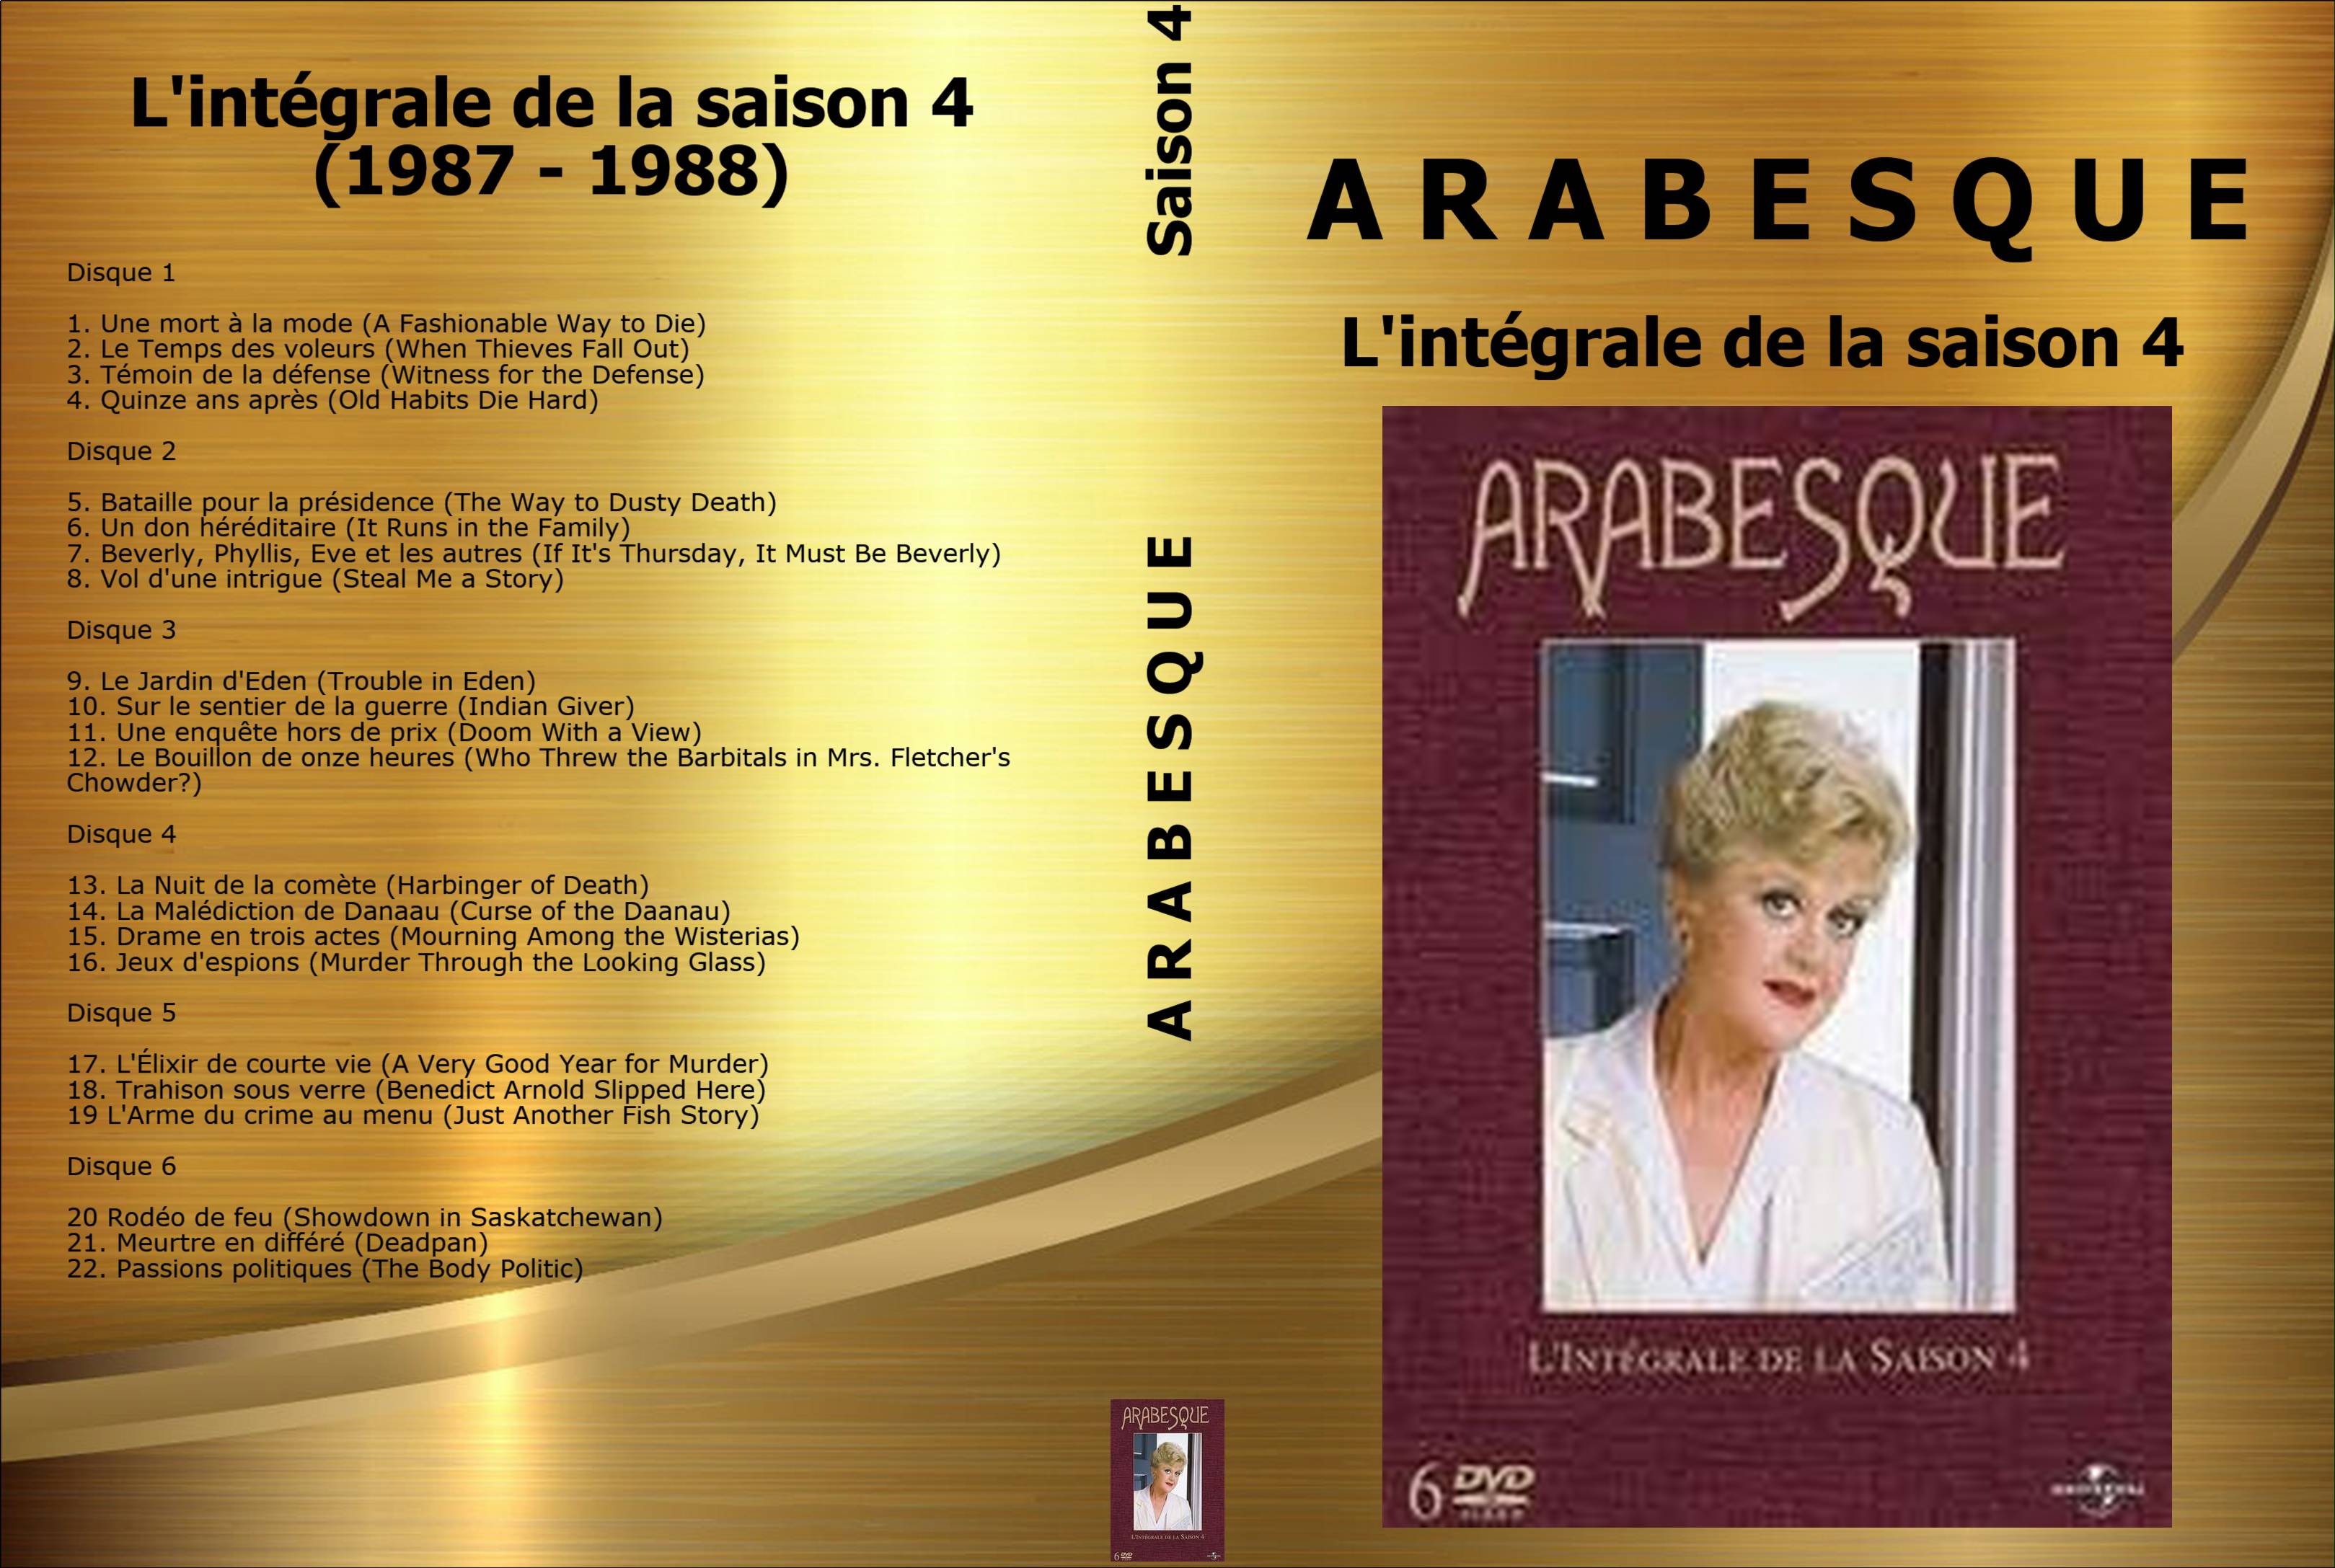 Jaquette DVD Arabesque saison 4 custom